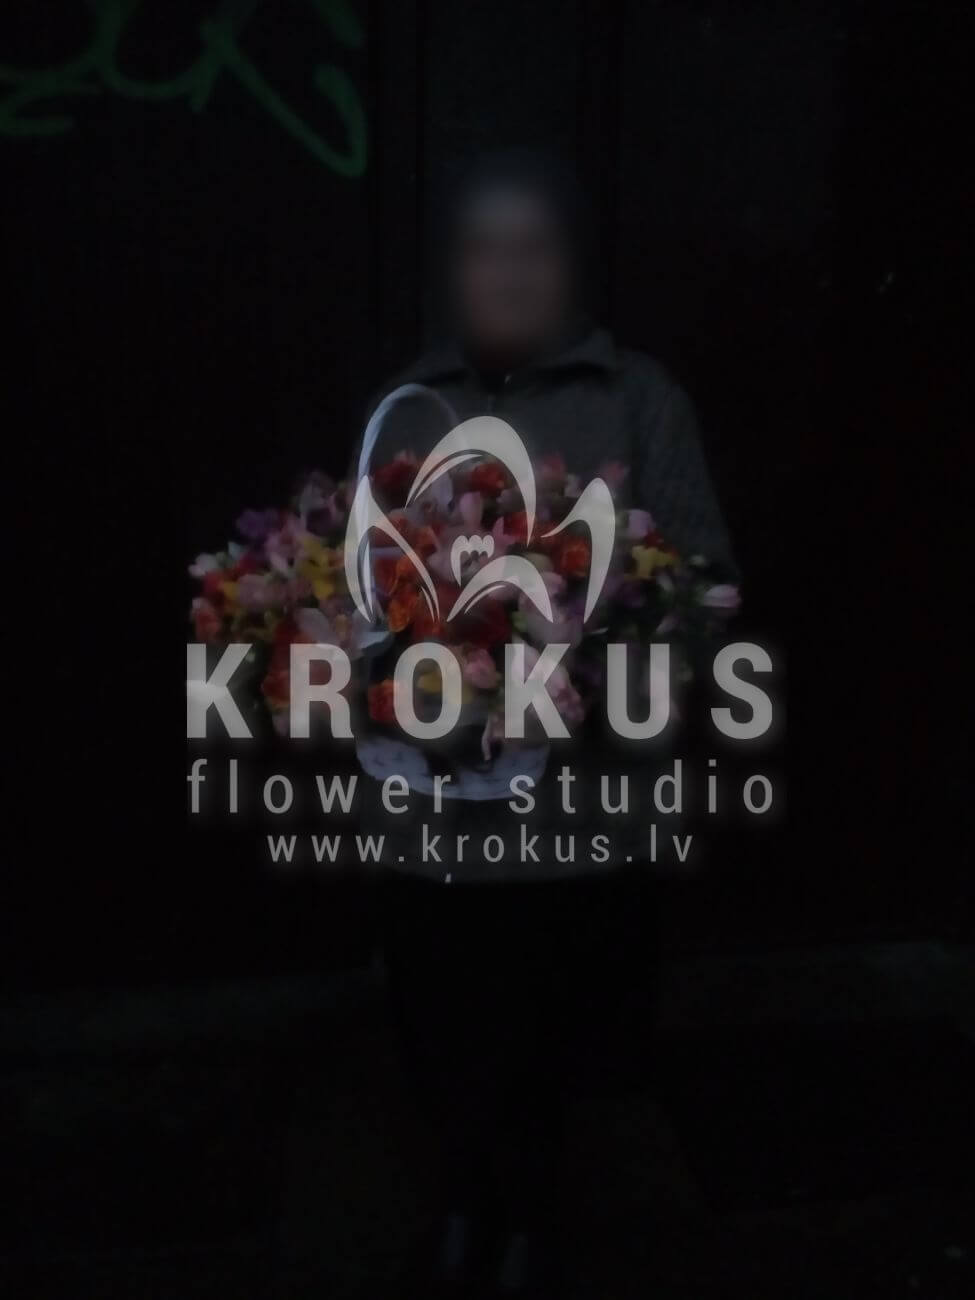 Deliver flowers to Latvia (shrub rosesorchidsalstroemeriasalalred roses)